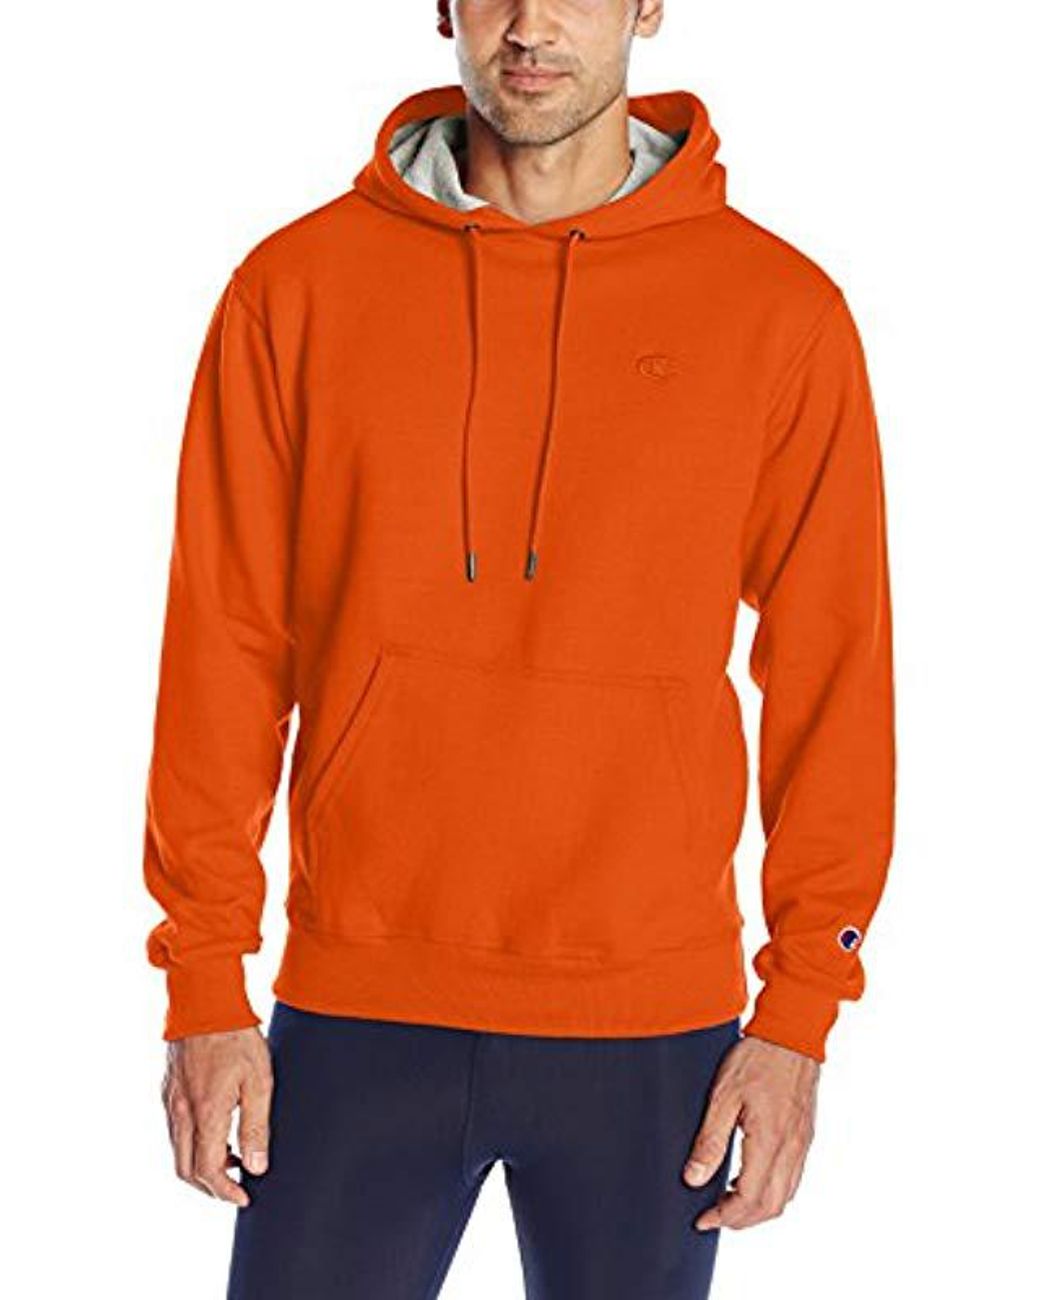 Champion Powerblend Fleece Pullover Hoodie in Orange for Men - Lyst